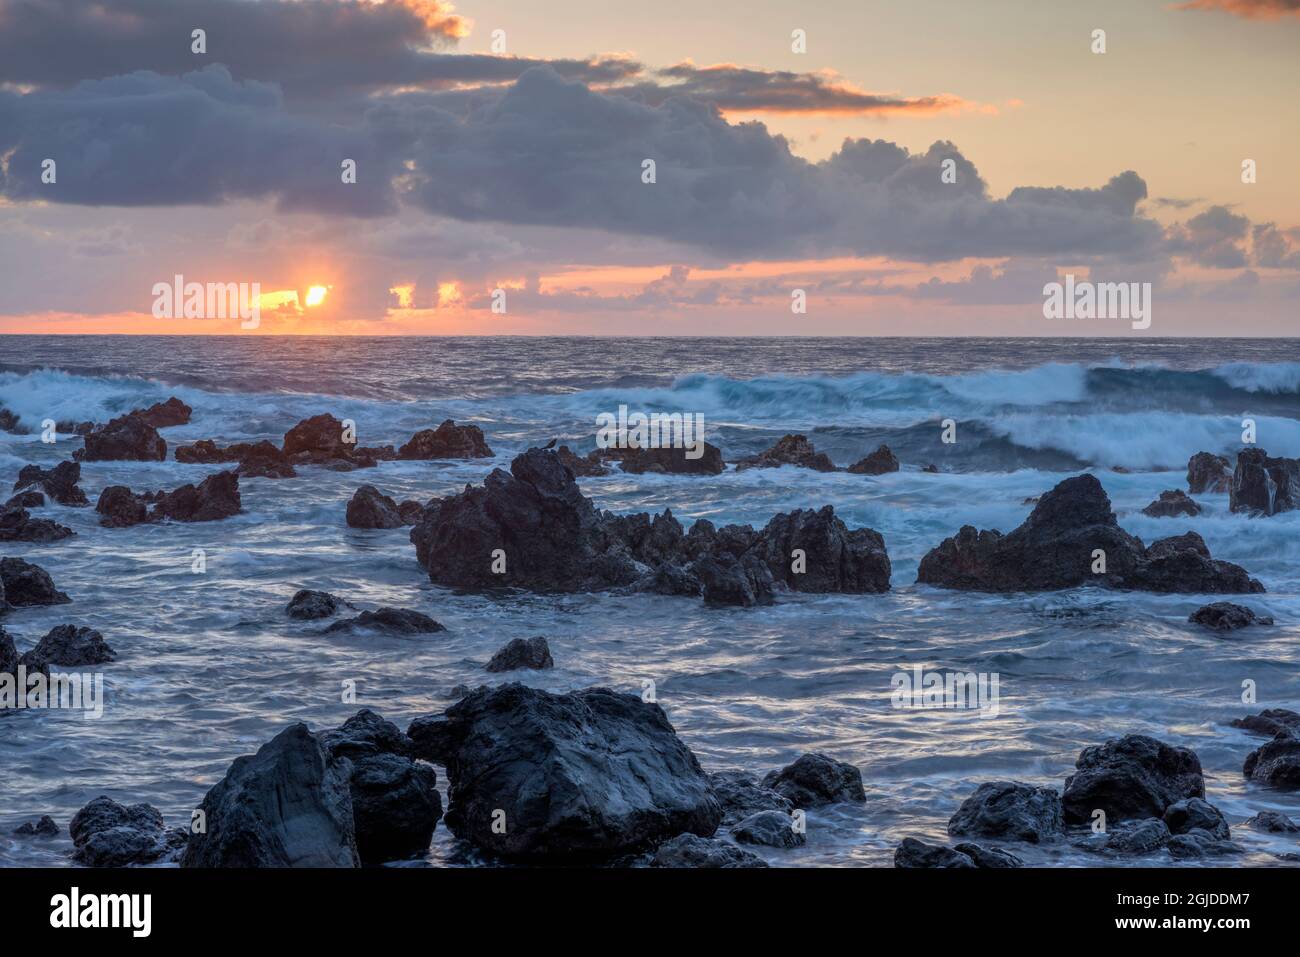 USA, Hawaii, Big Island of Hawaii. Laupahoehoe Point Beach Park, Sunrise over waves and rough volcanic rock. Stock Photo